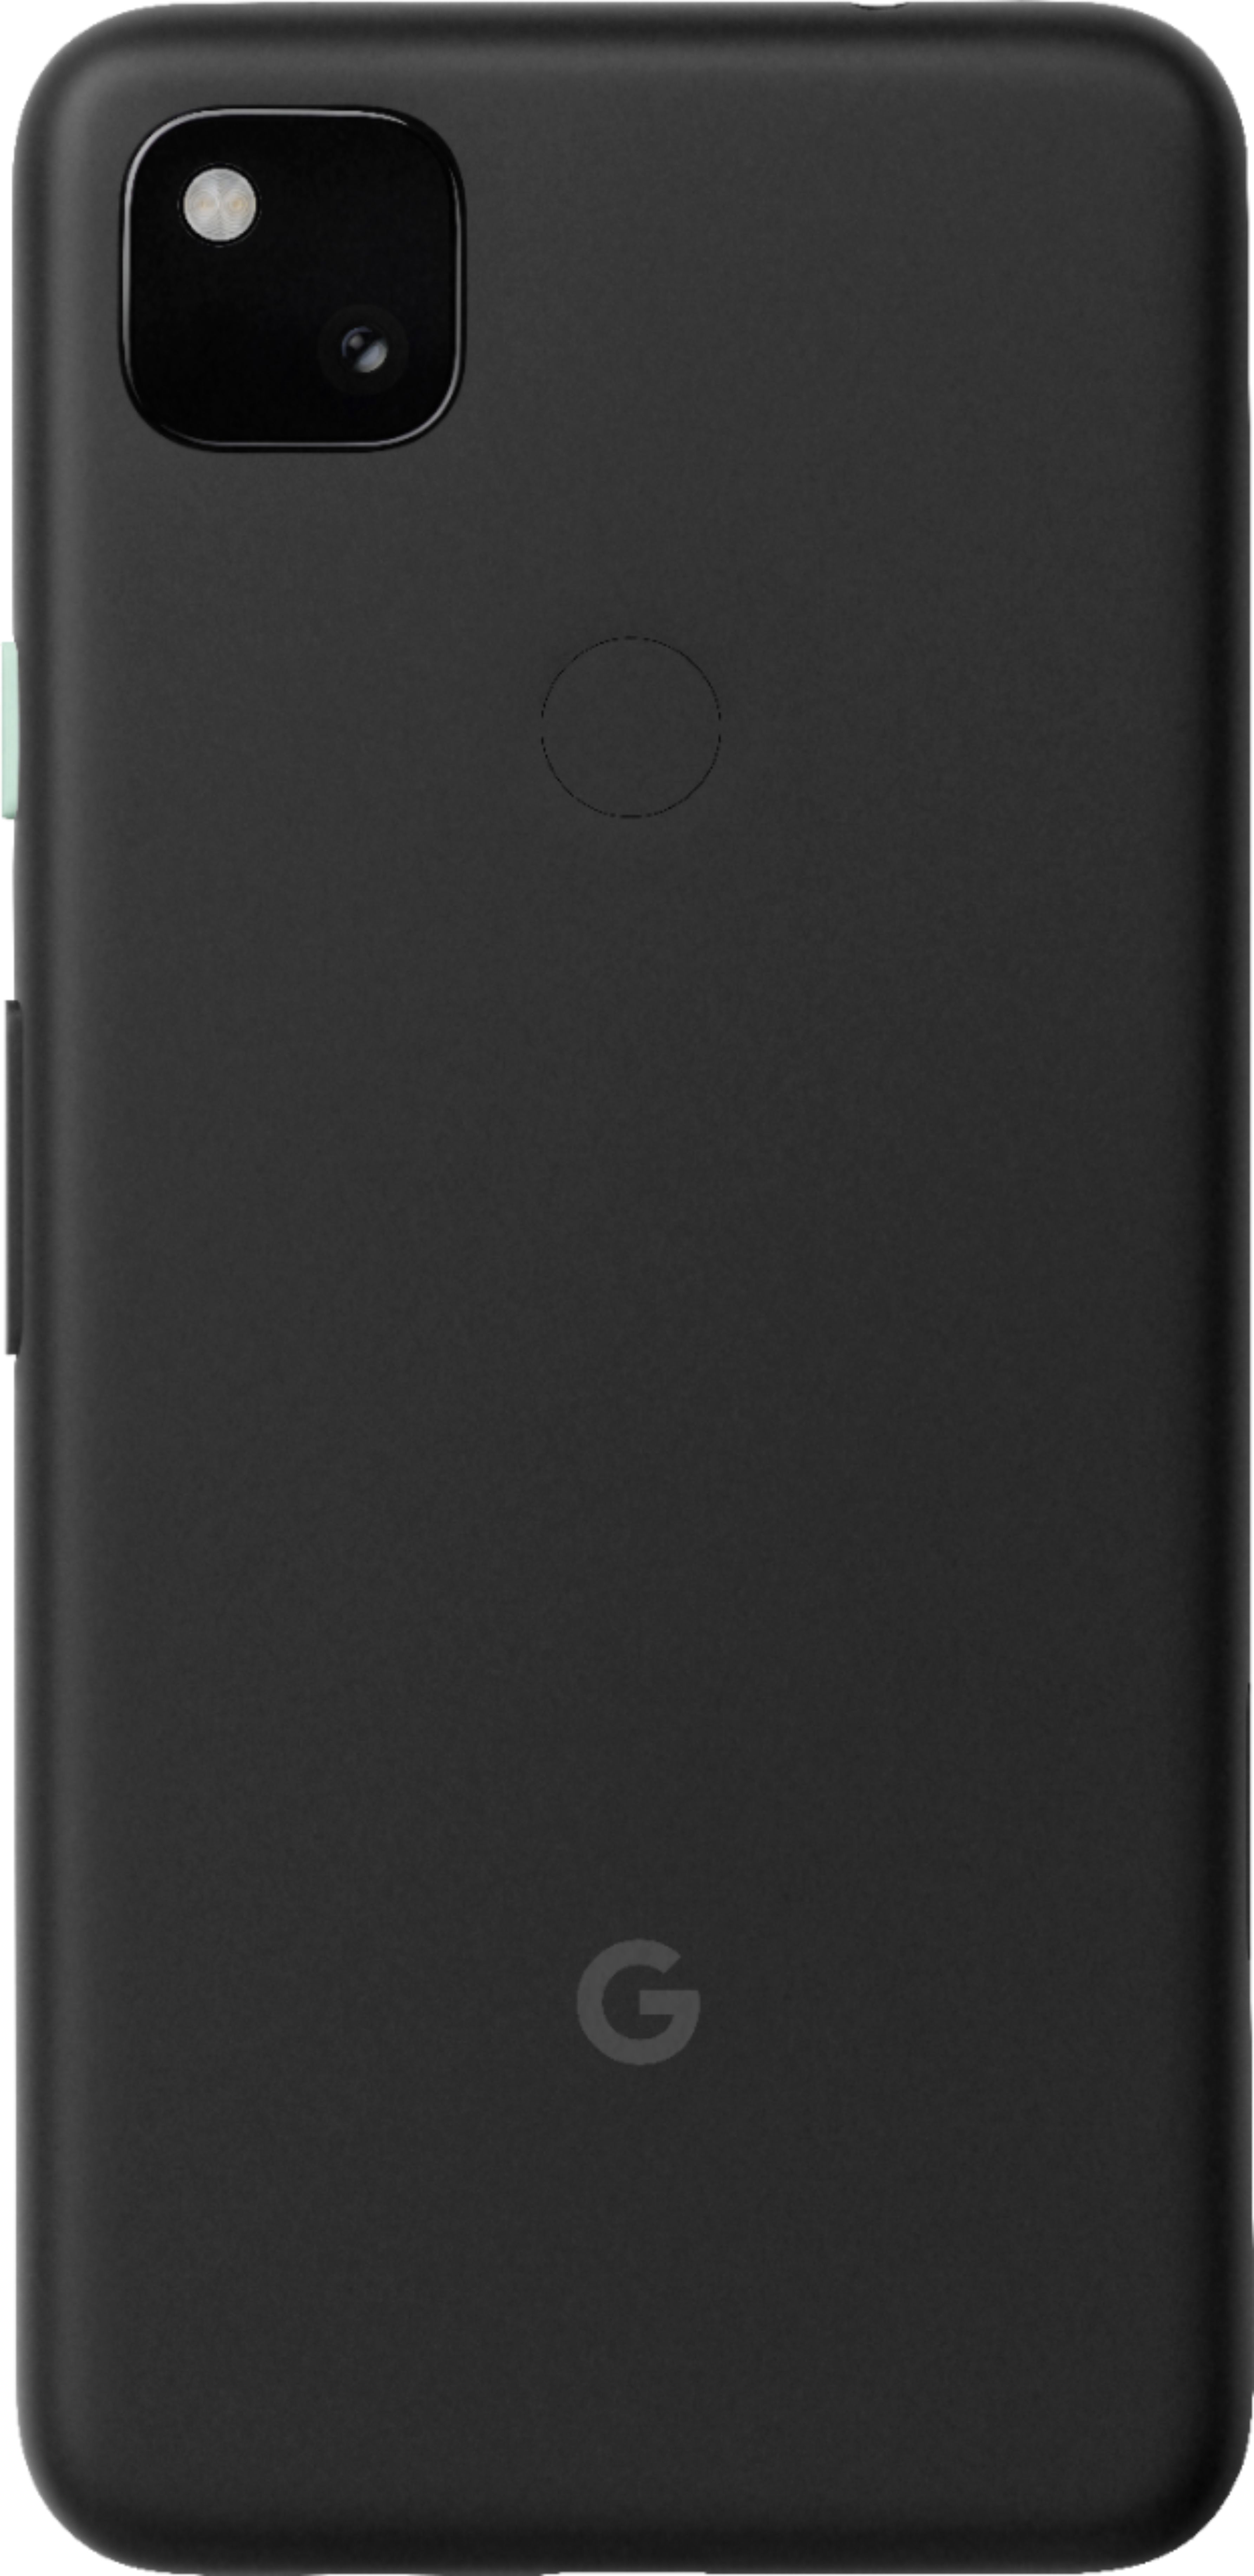 Google Pixel 4a 128GB Just Black (Verizon) GA01738-US - Best Buy